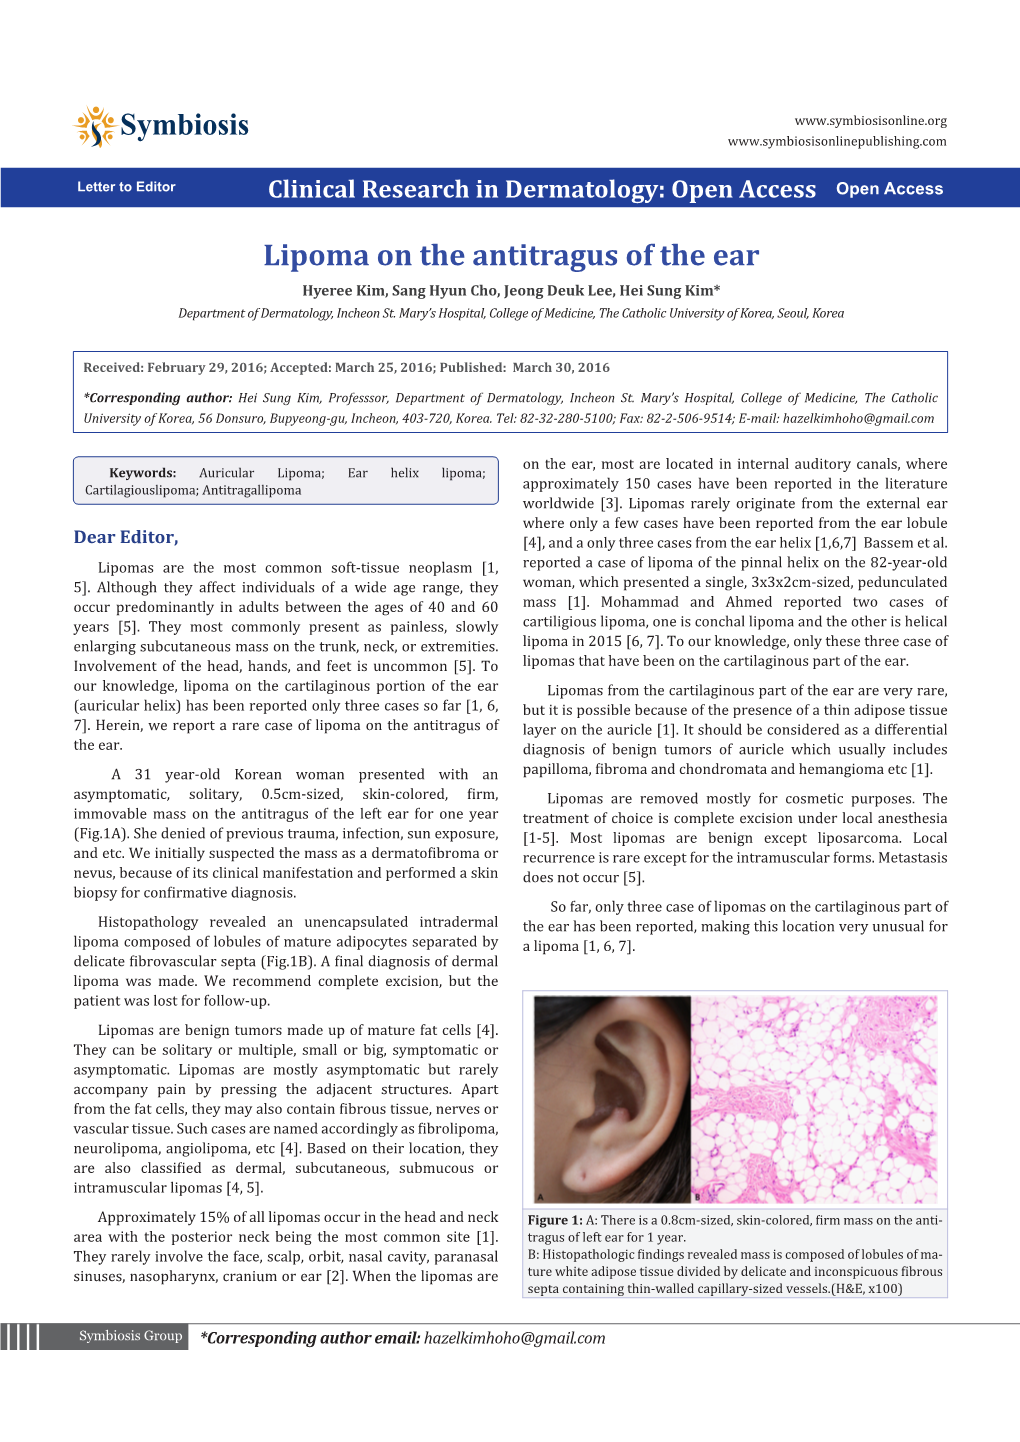 Lipoma on the Antitragus of the Ear Hyeree Kim, Sang Hyun Cho, Jeong Deuk Lee, Hei Sung Kim* Department of Dermatology, Incheon St